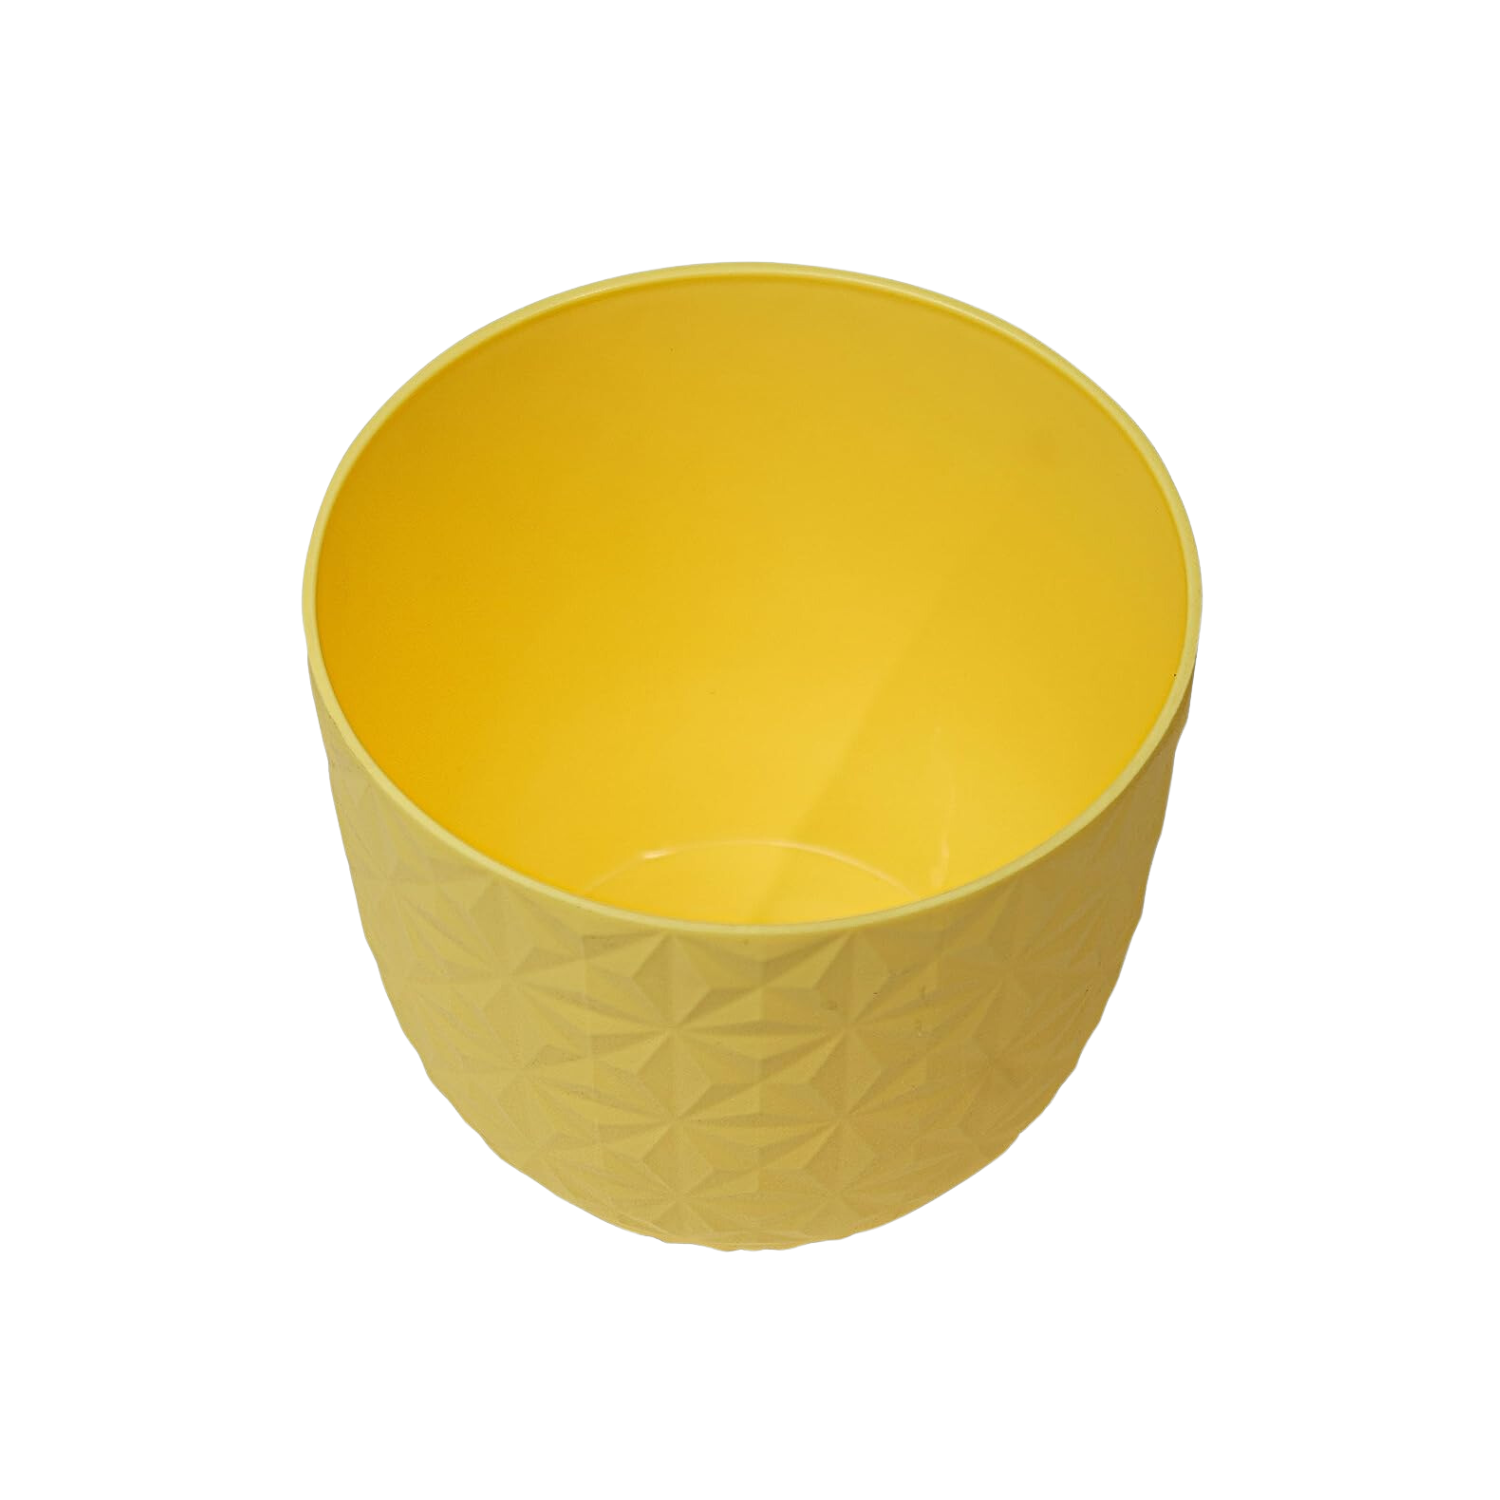 Verona Diamond Planter 11cm Round Plastic Pot For Home & Garden (11CM | 4INCH)